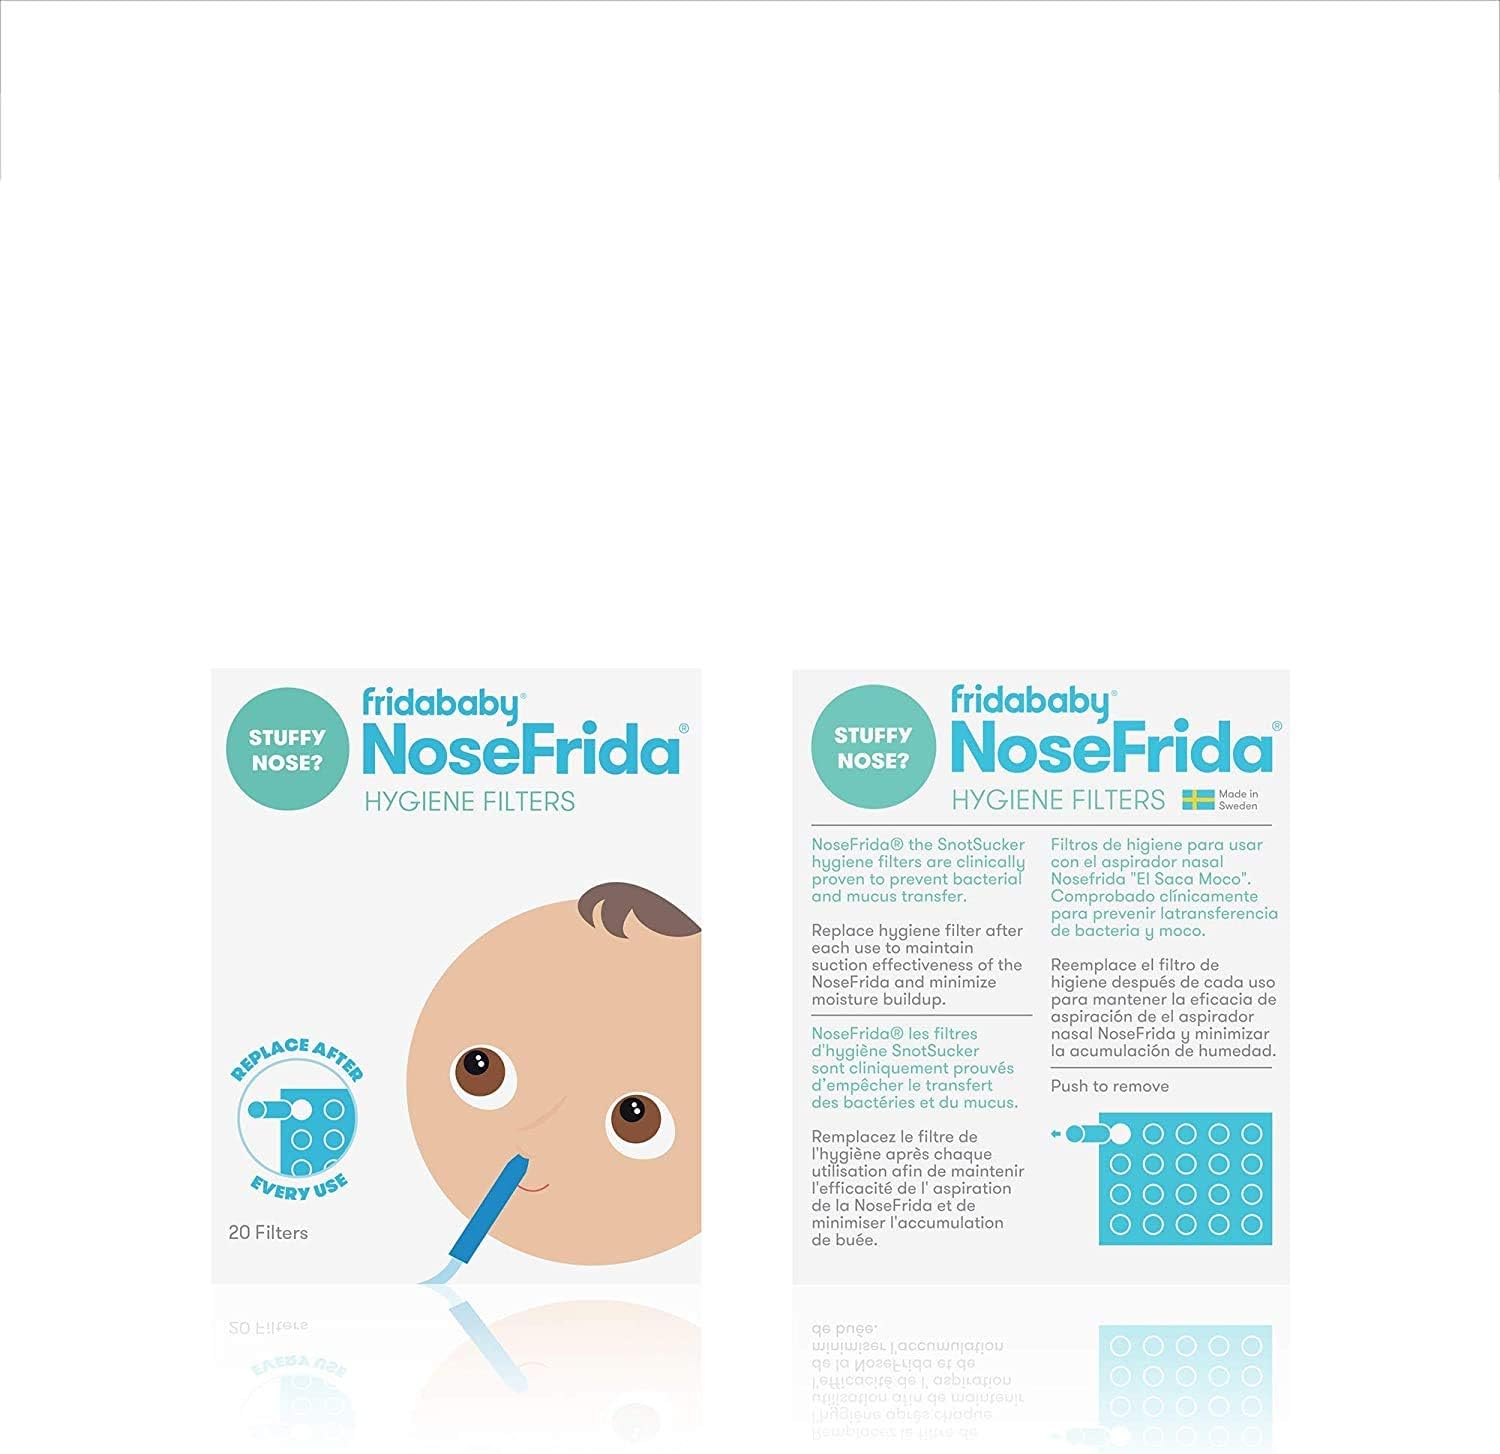 Fridababy - NoseFrida Hygiene Filters